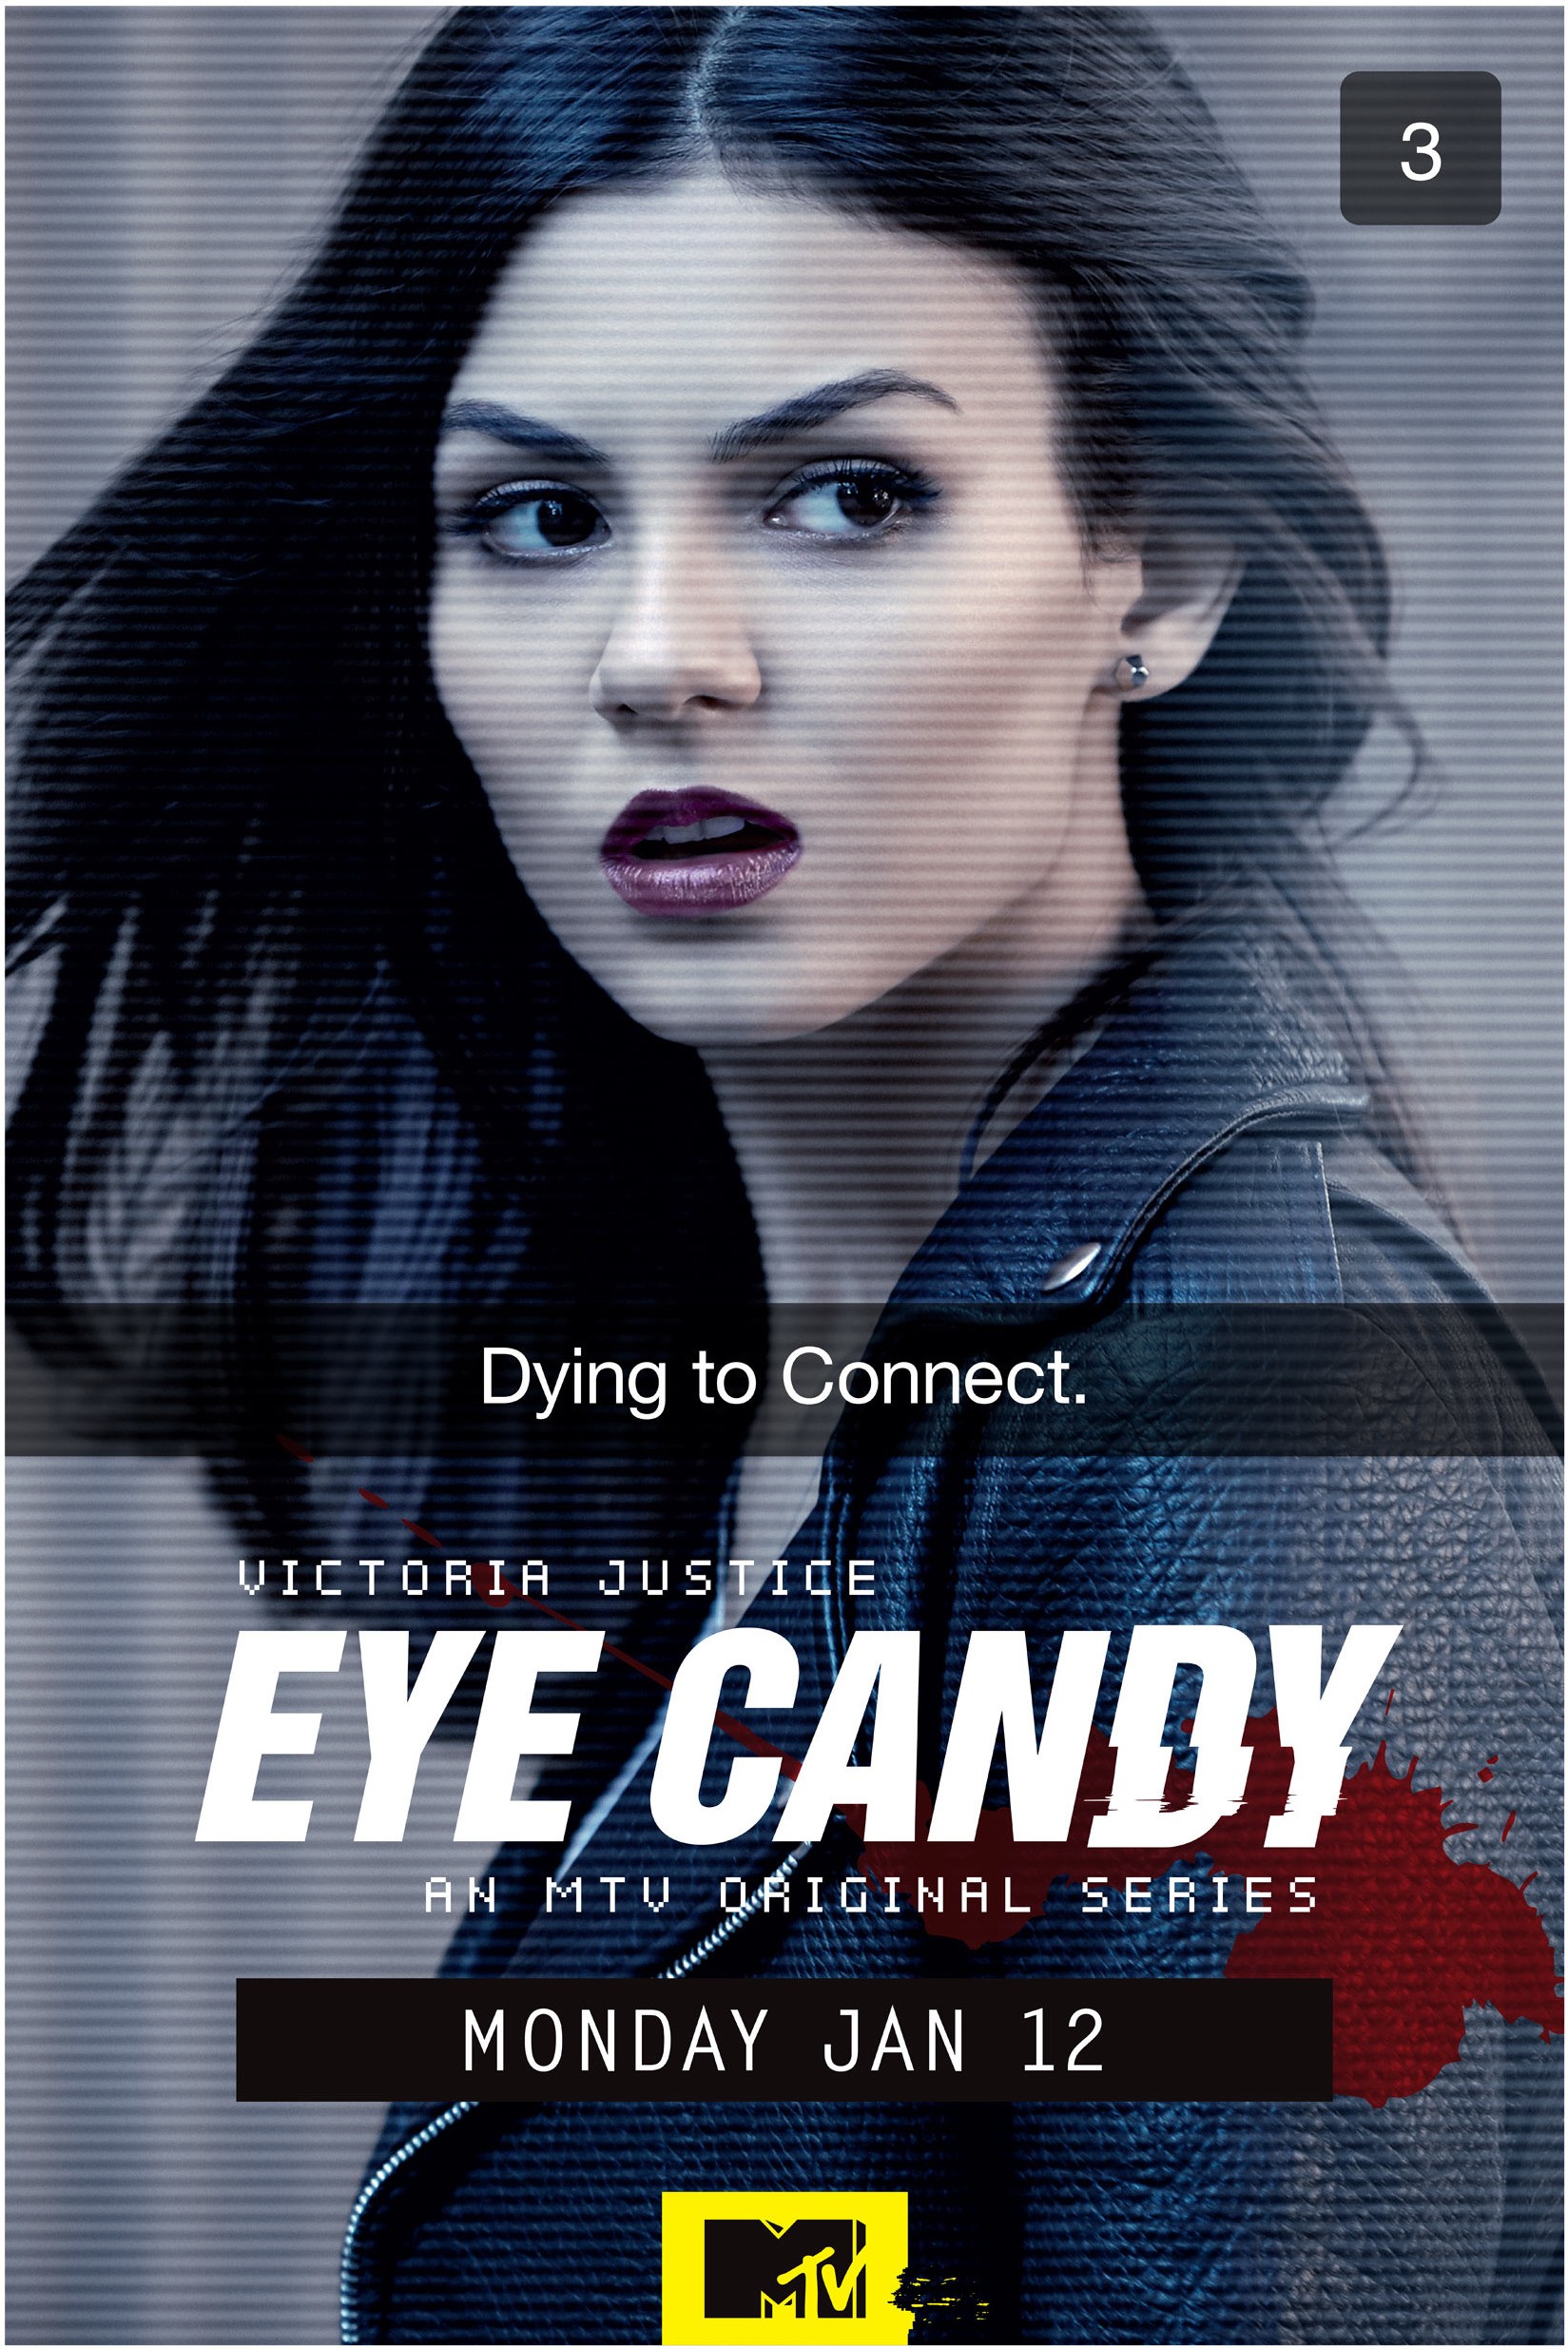 Mega Sized TV Poster Image for Eye Candy 